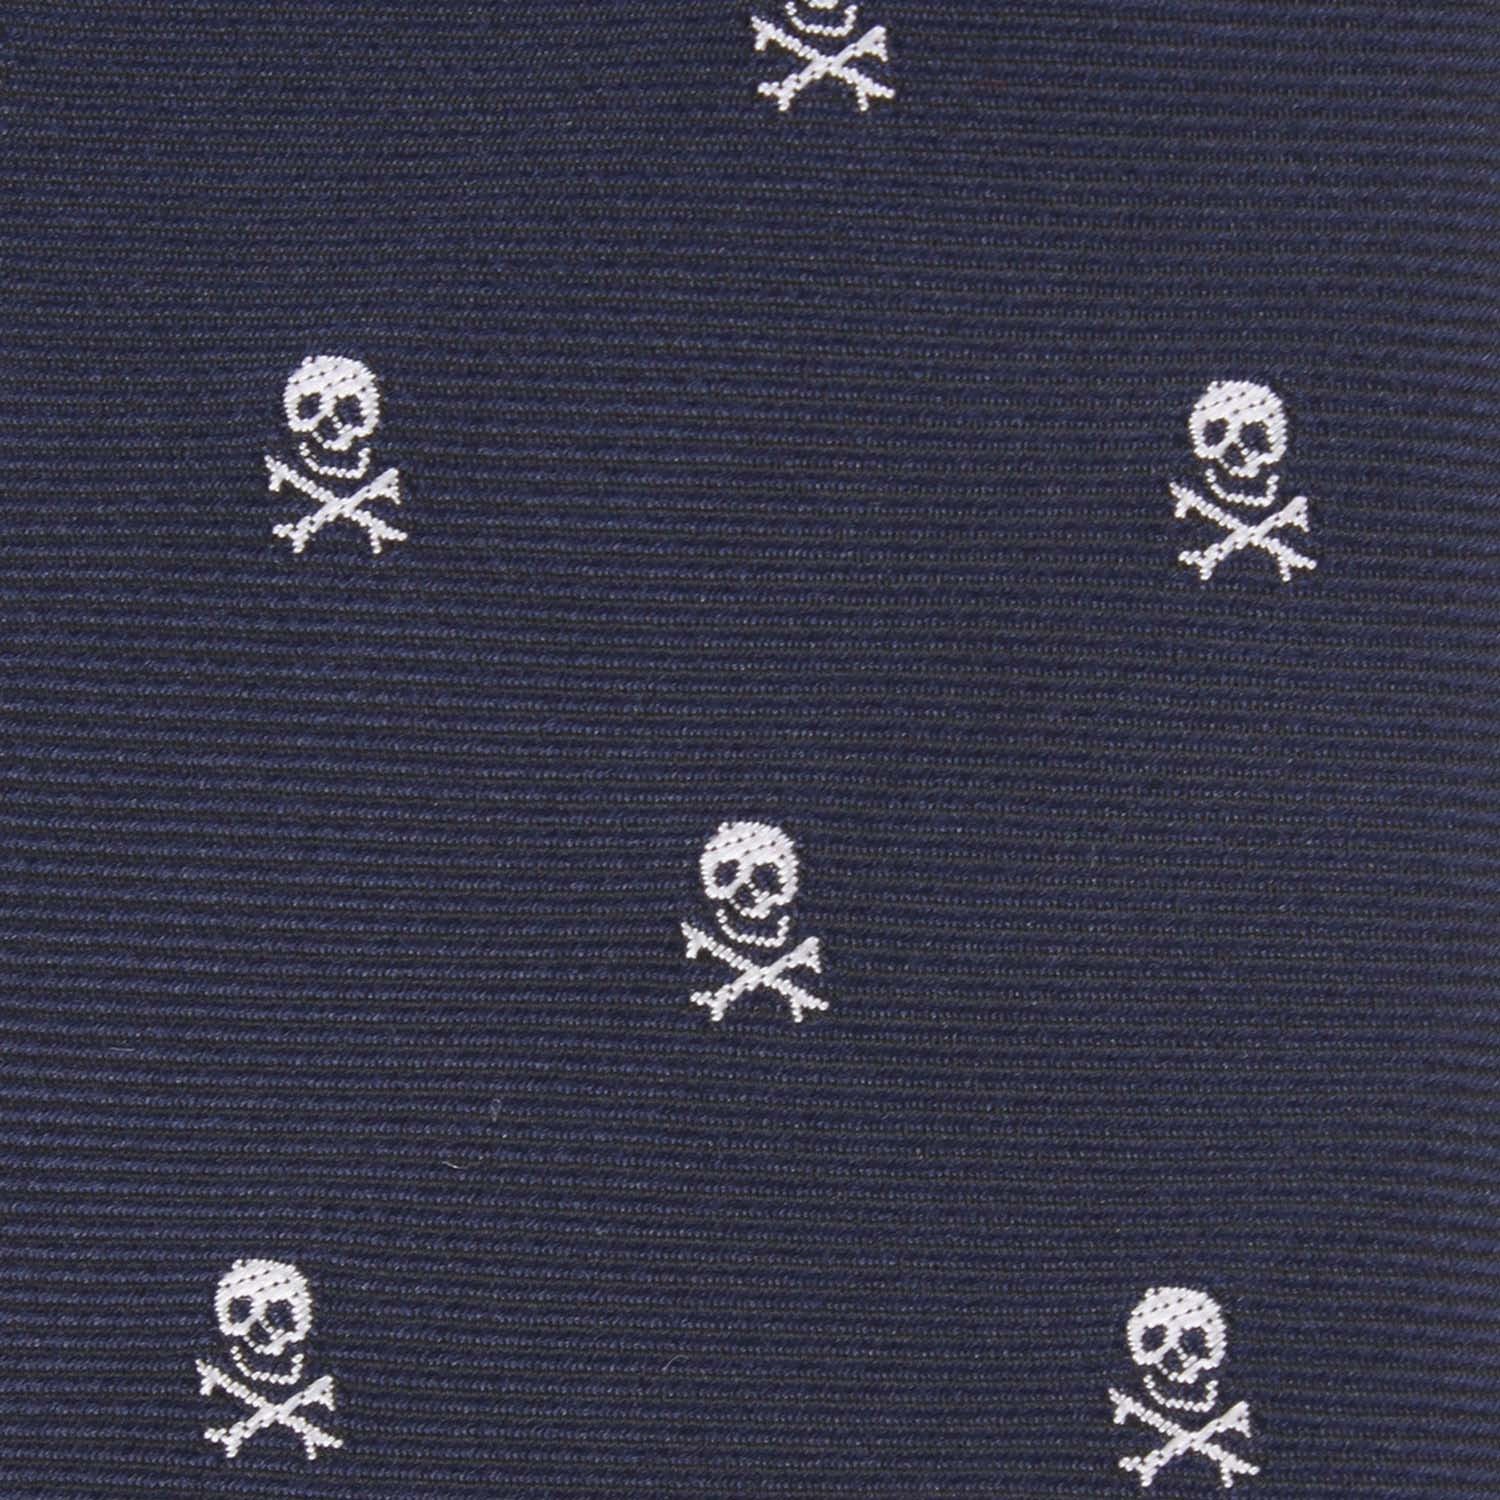 Navy Blue Pirate Skull Fabric Self Tie Bow Tie M099